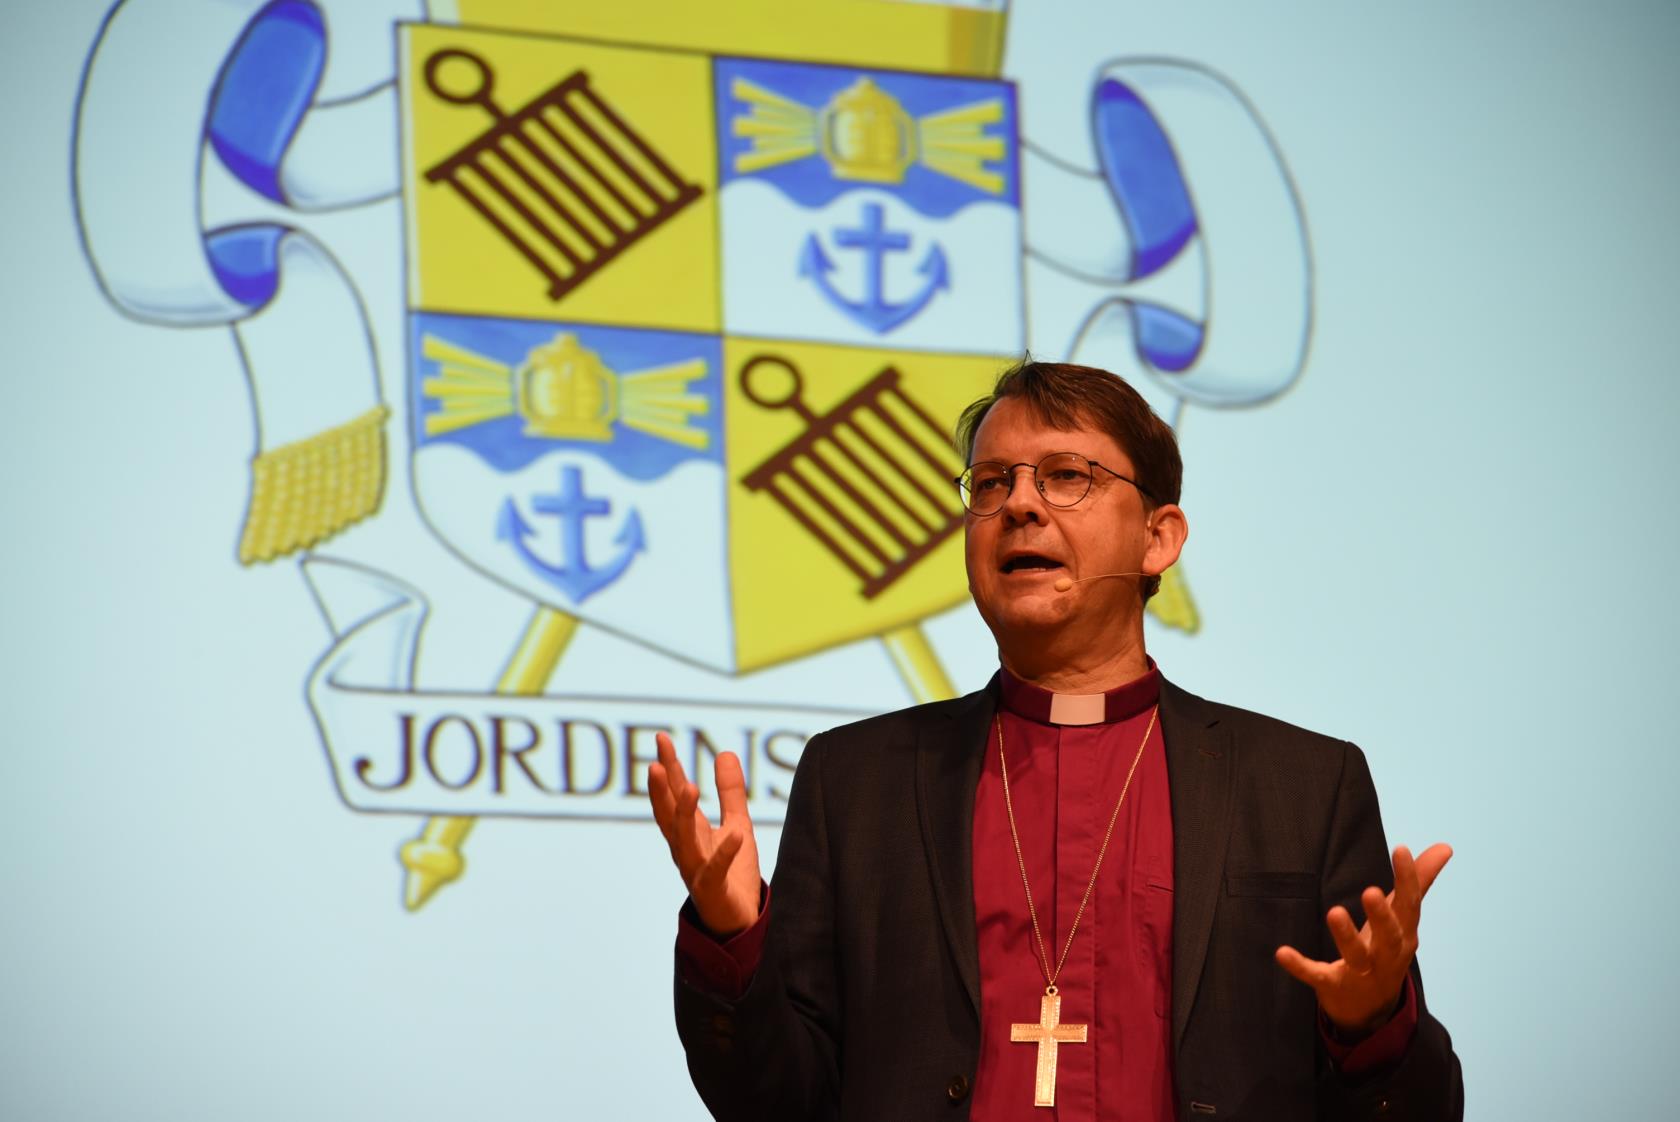 Biskop Johans valspråk är "Jordens salt".